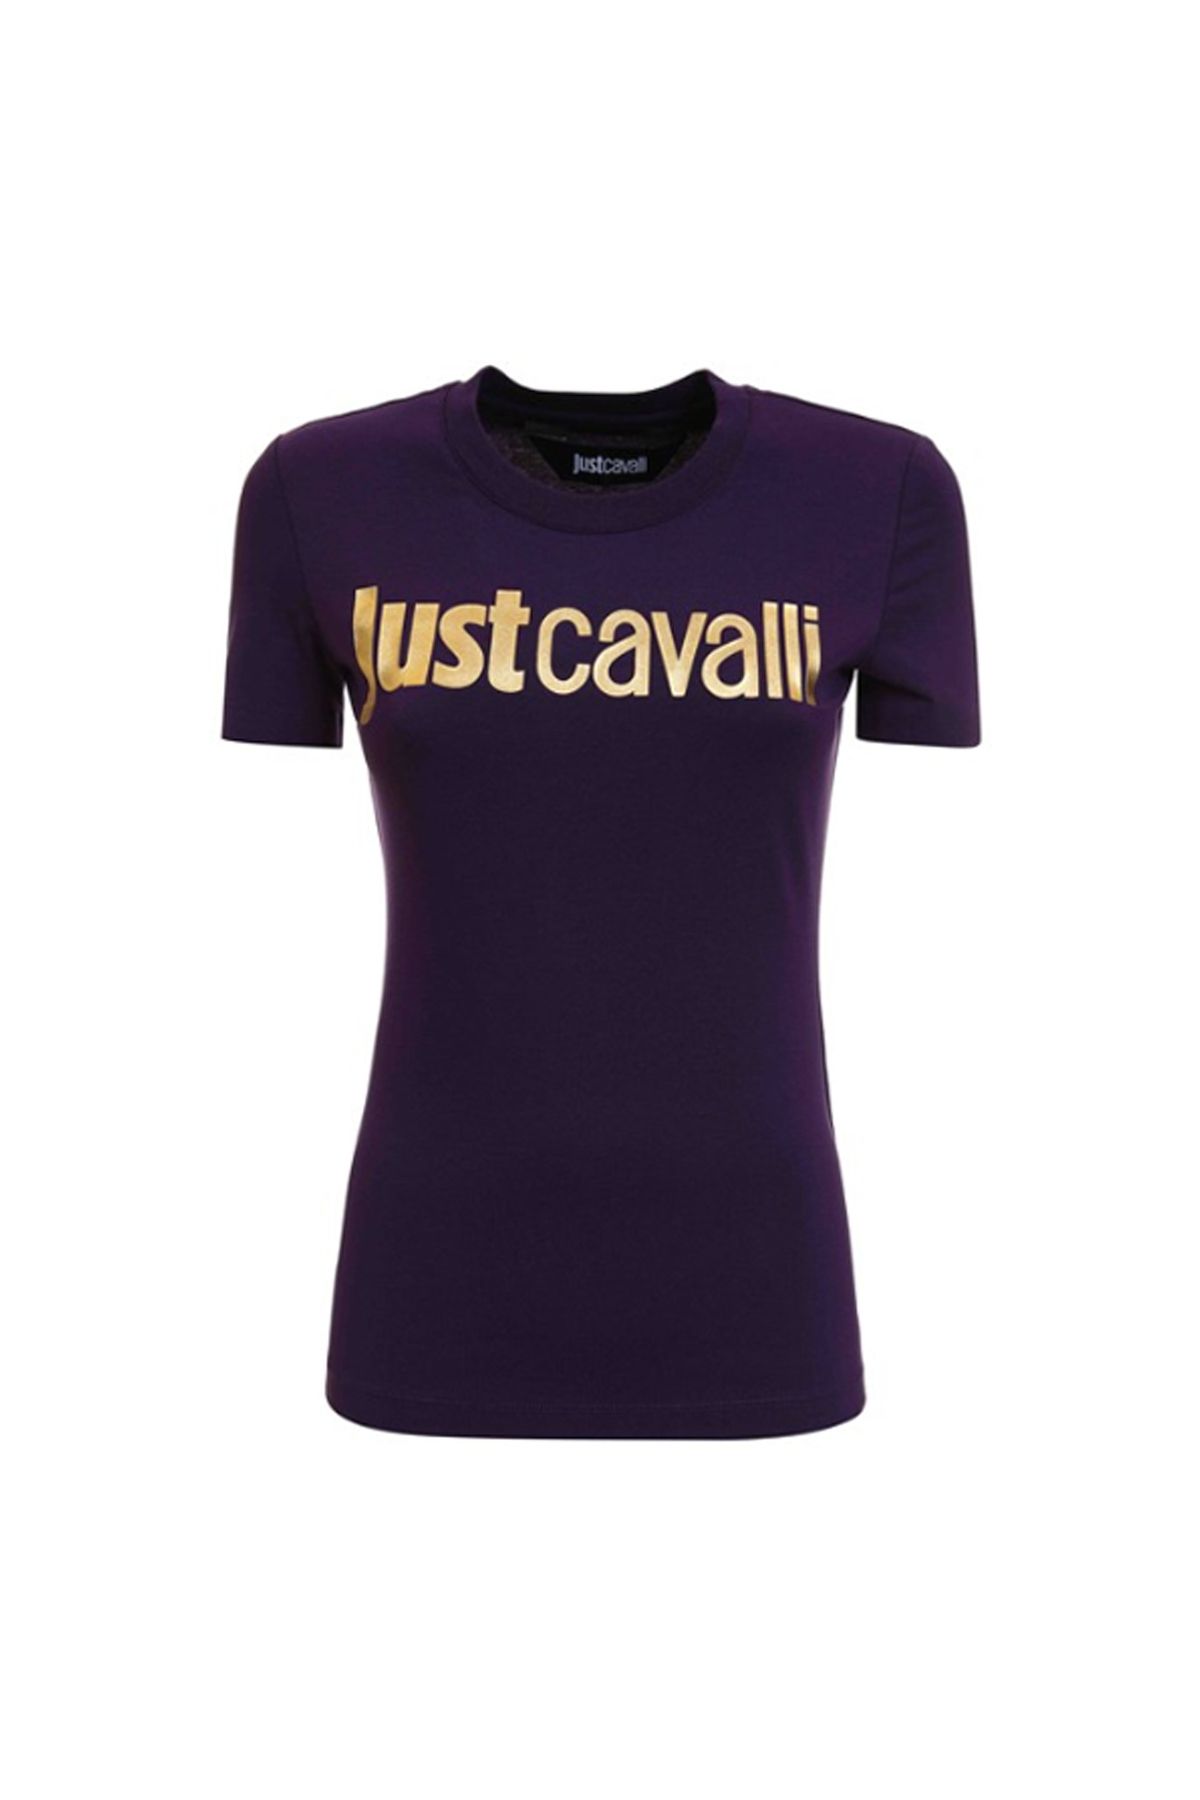 Just Cavalli Bisiklet Yaka Baskılı Siyah Kadın T-shirt 75paht00